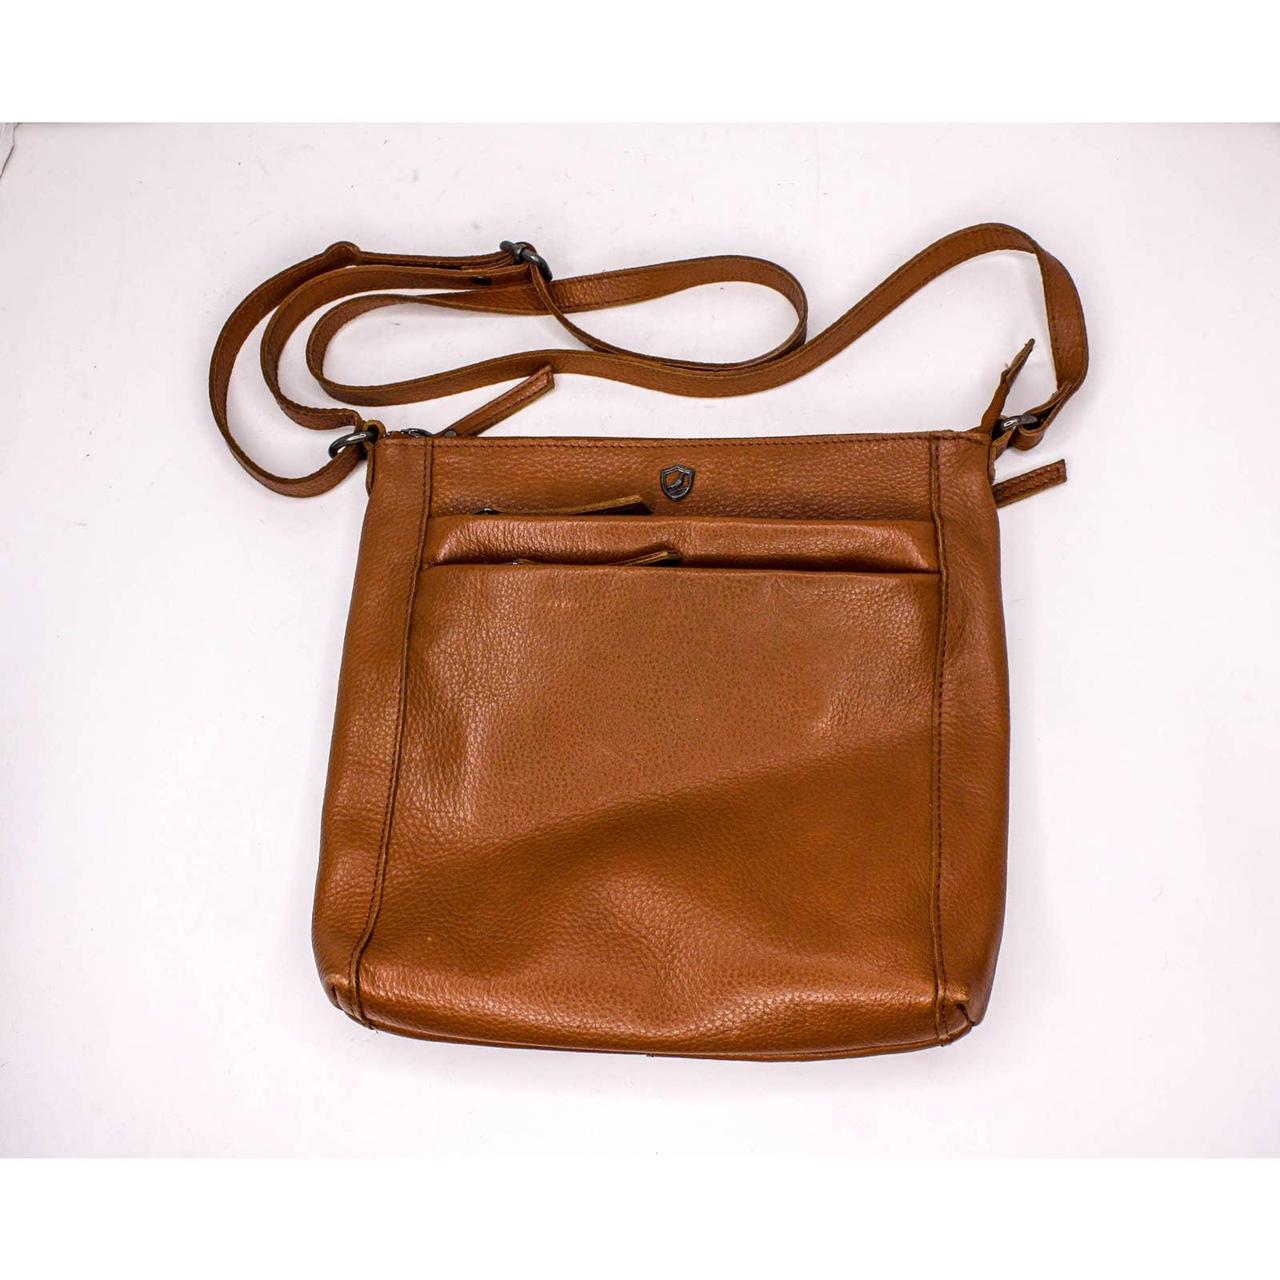 Cochoa brown leather crossbody purse Pebbled leather... - Depop